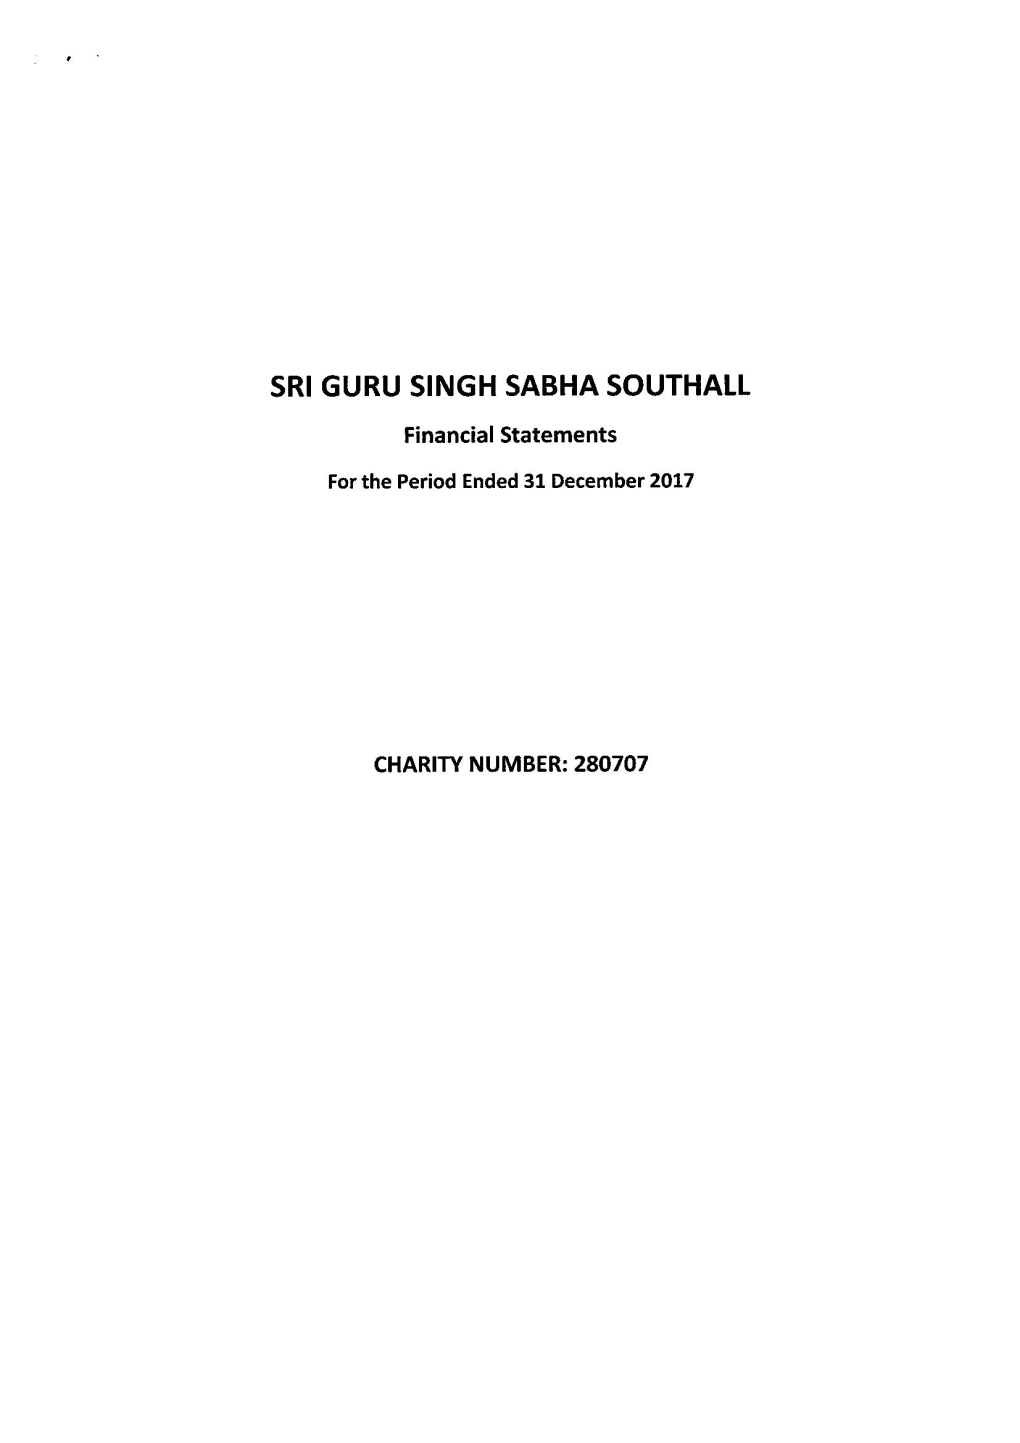 Sri Guru Singh Sabha Southall